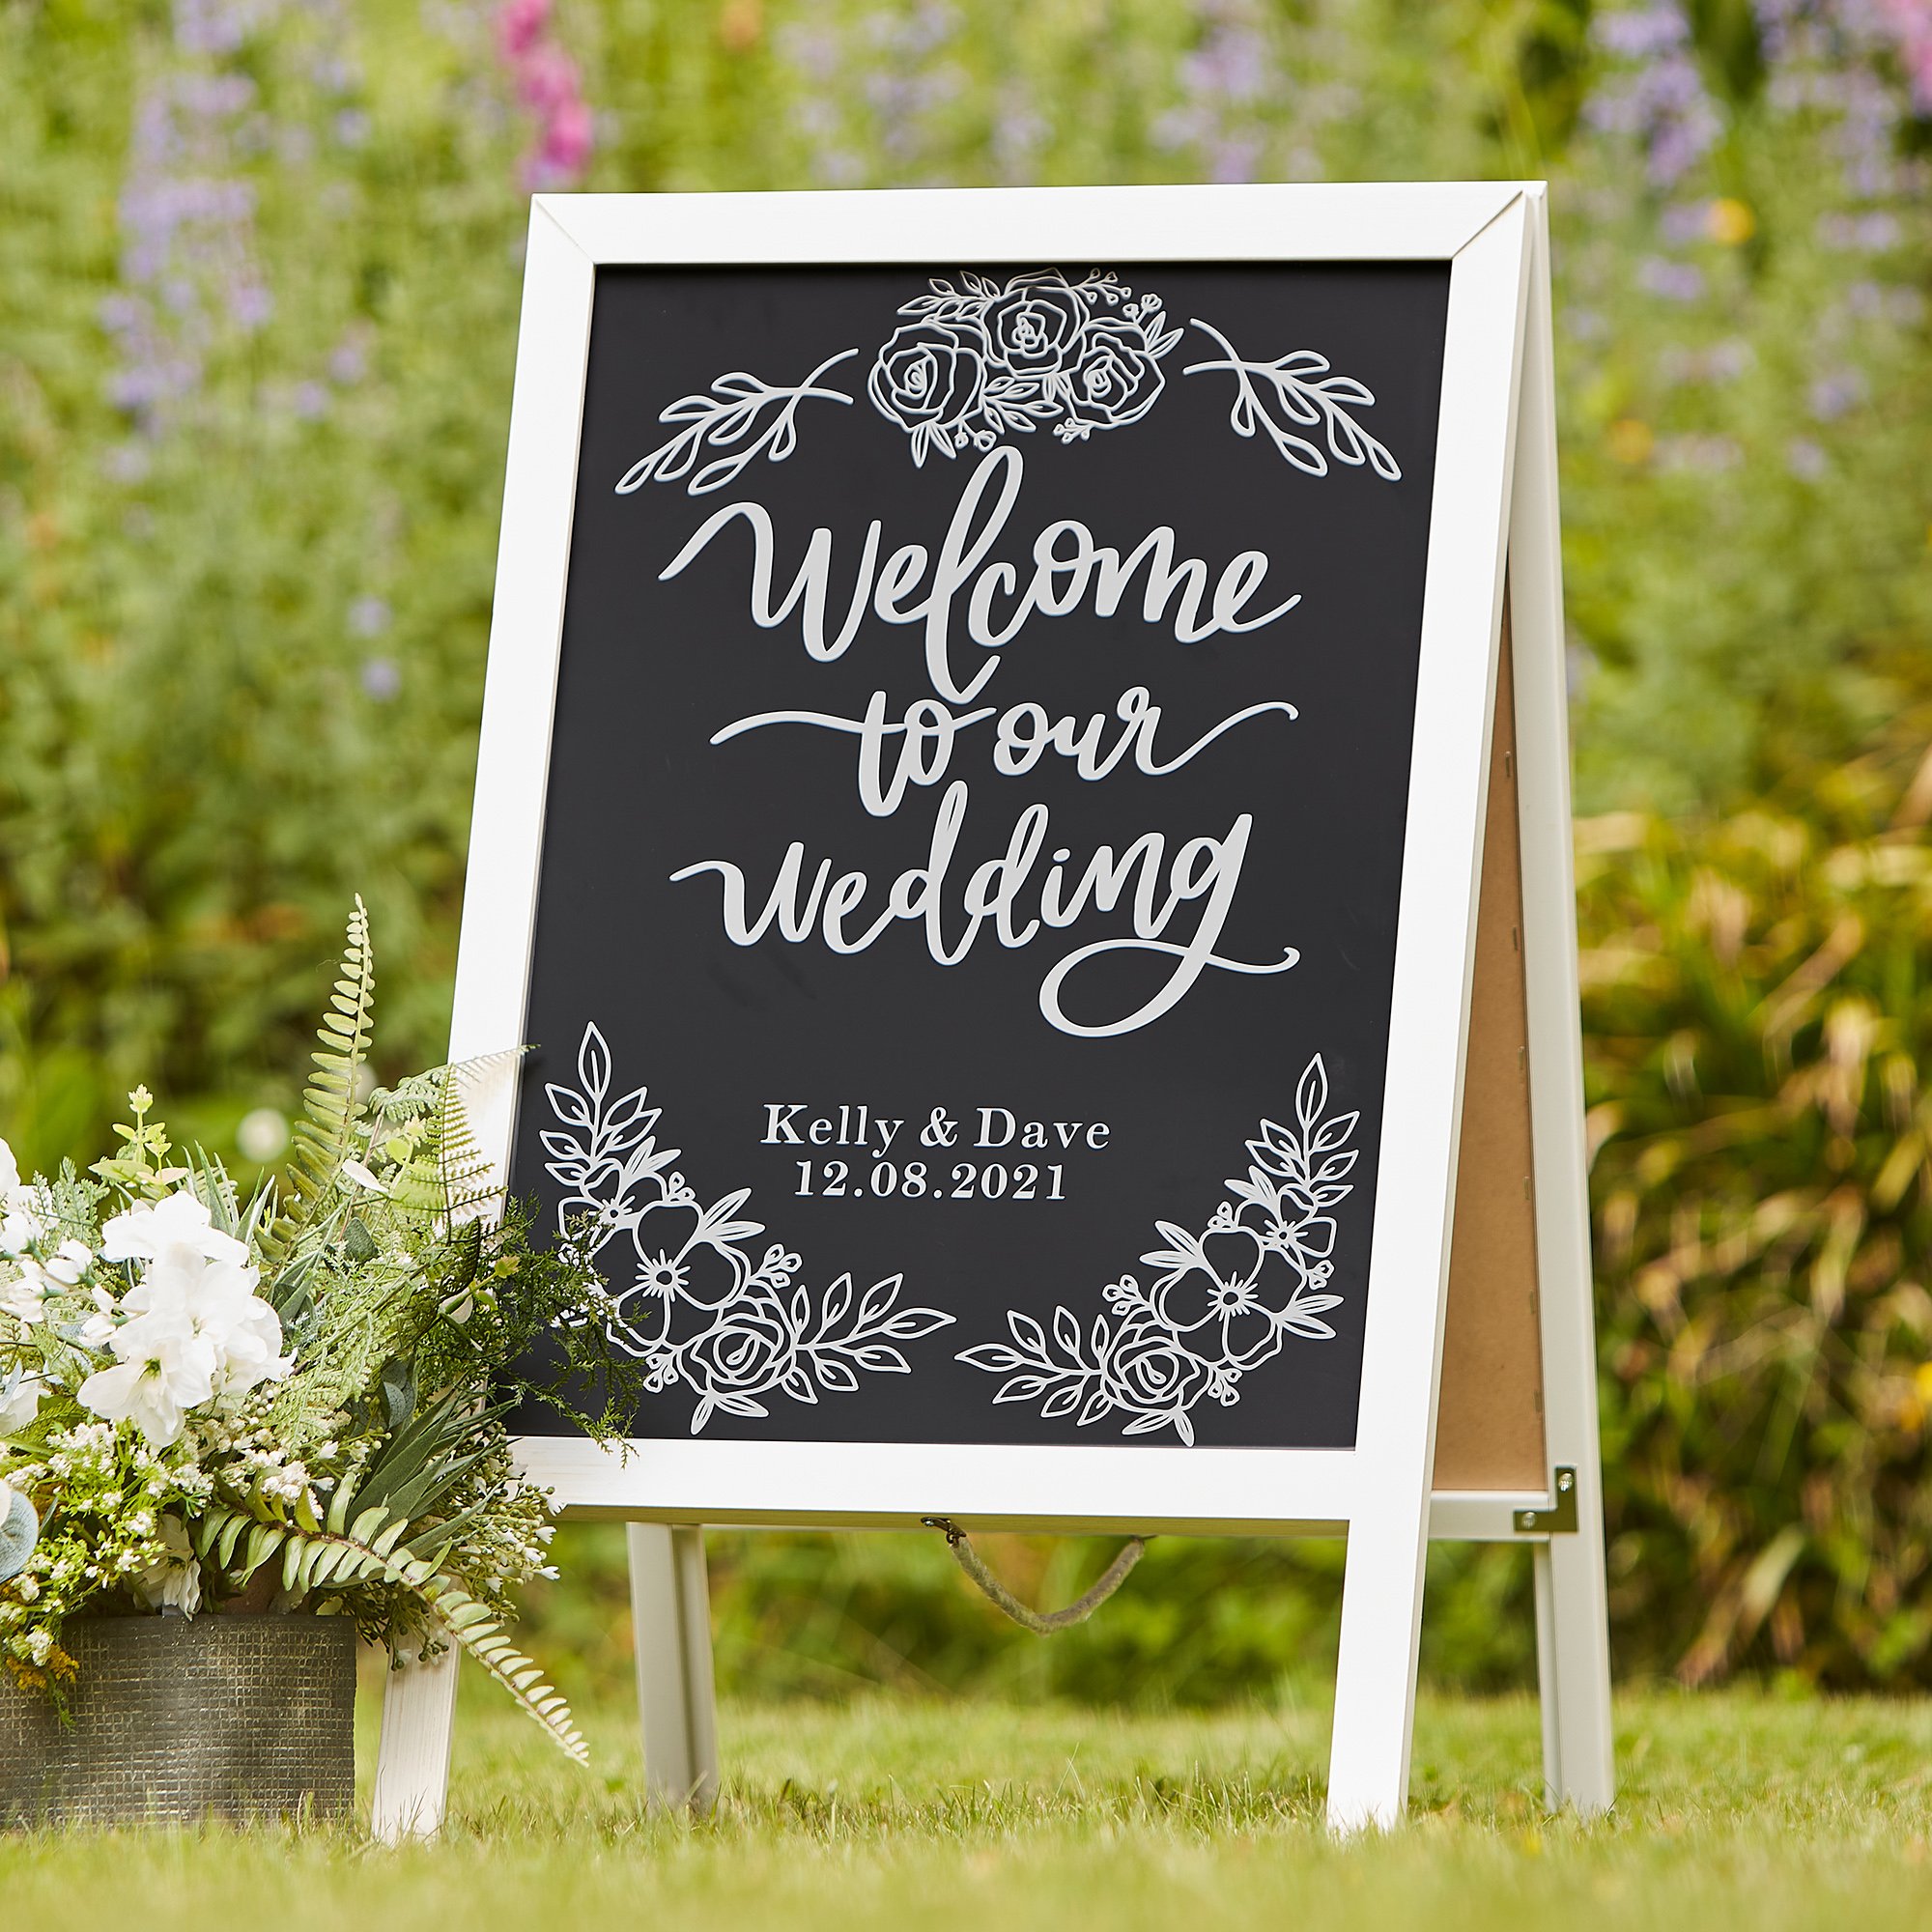 Cricut: How to Make a Wedding Easel Welcome Sign | Hobbycraft UK